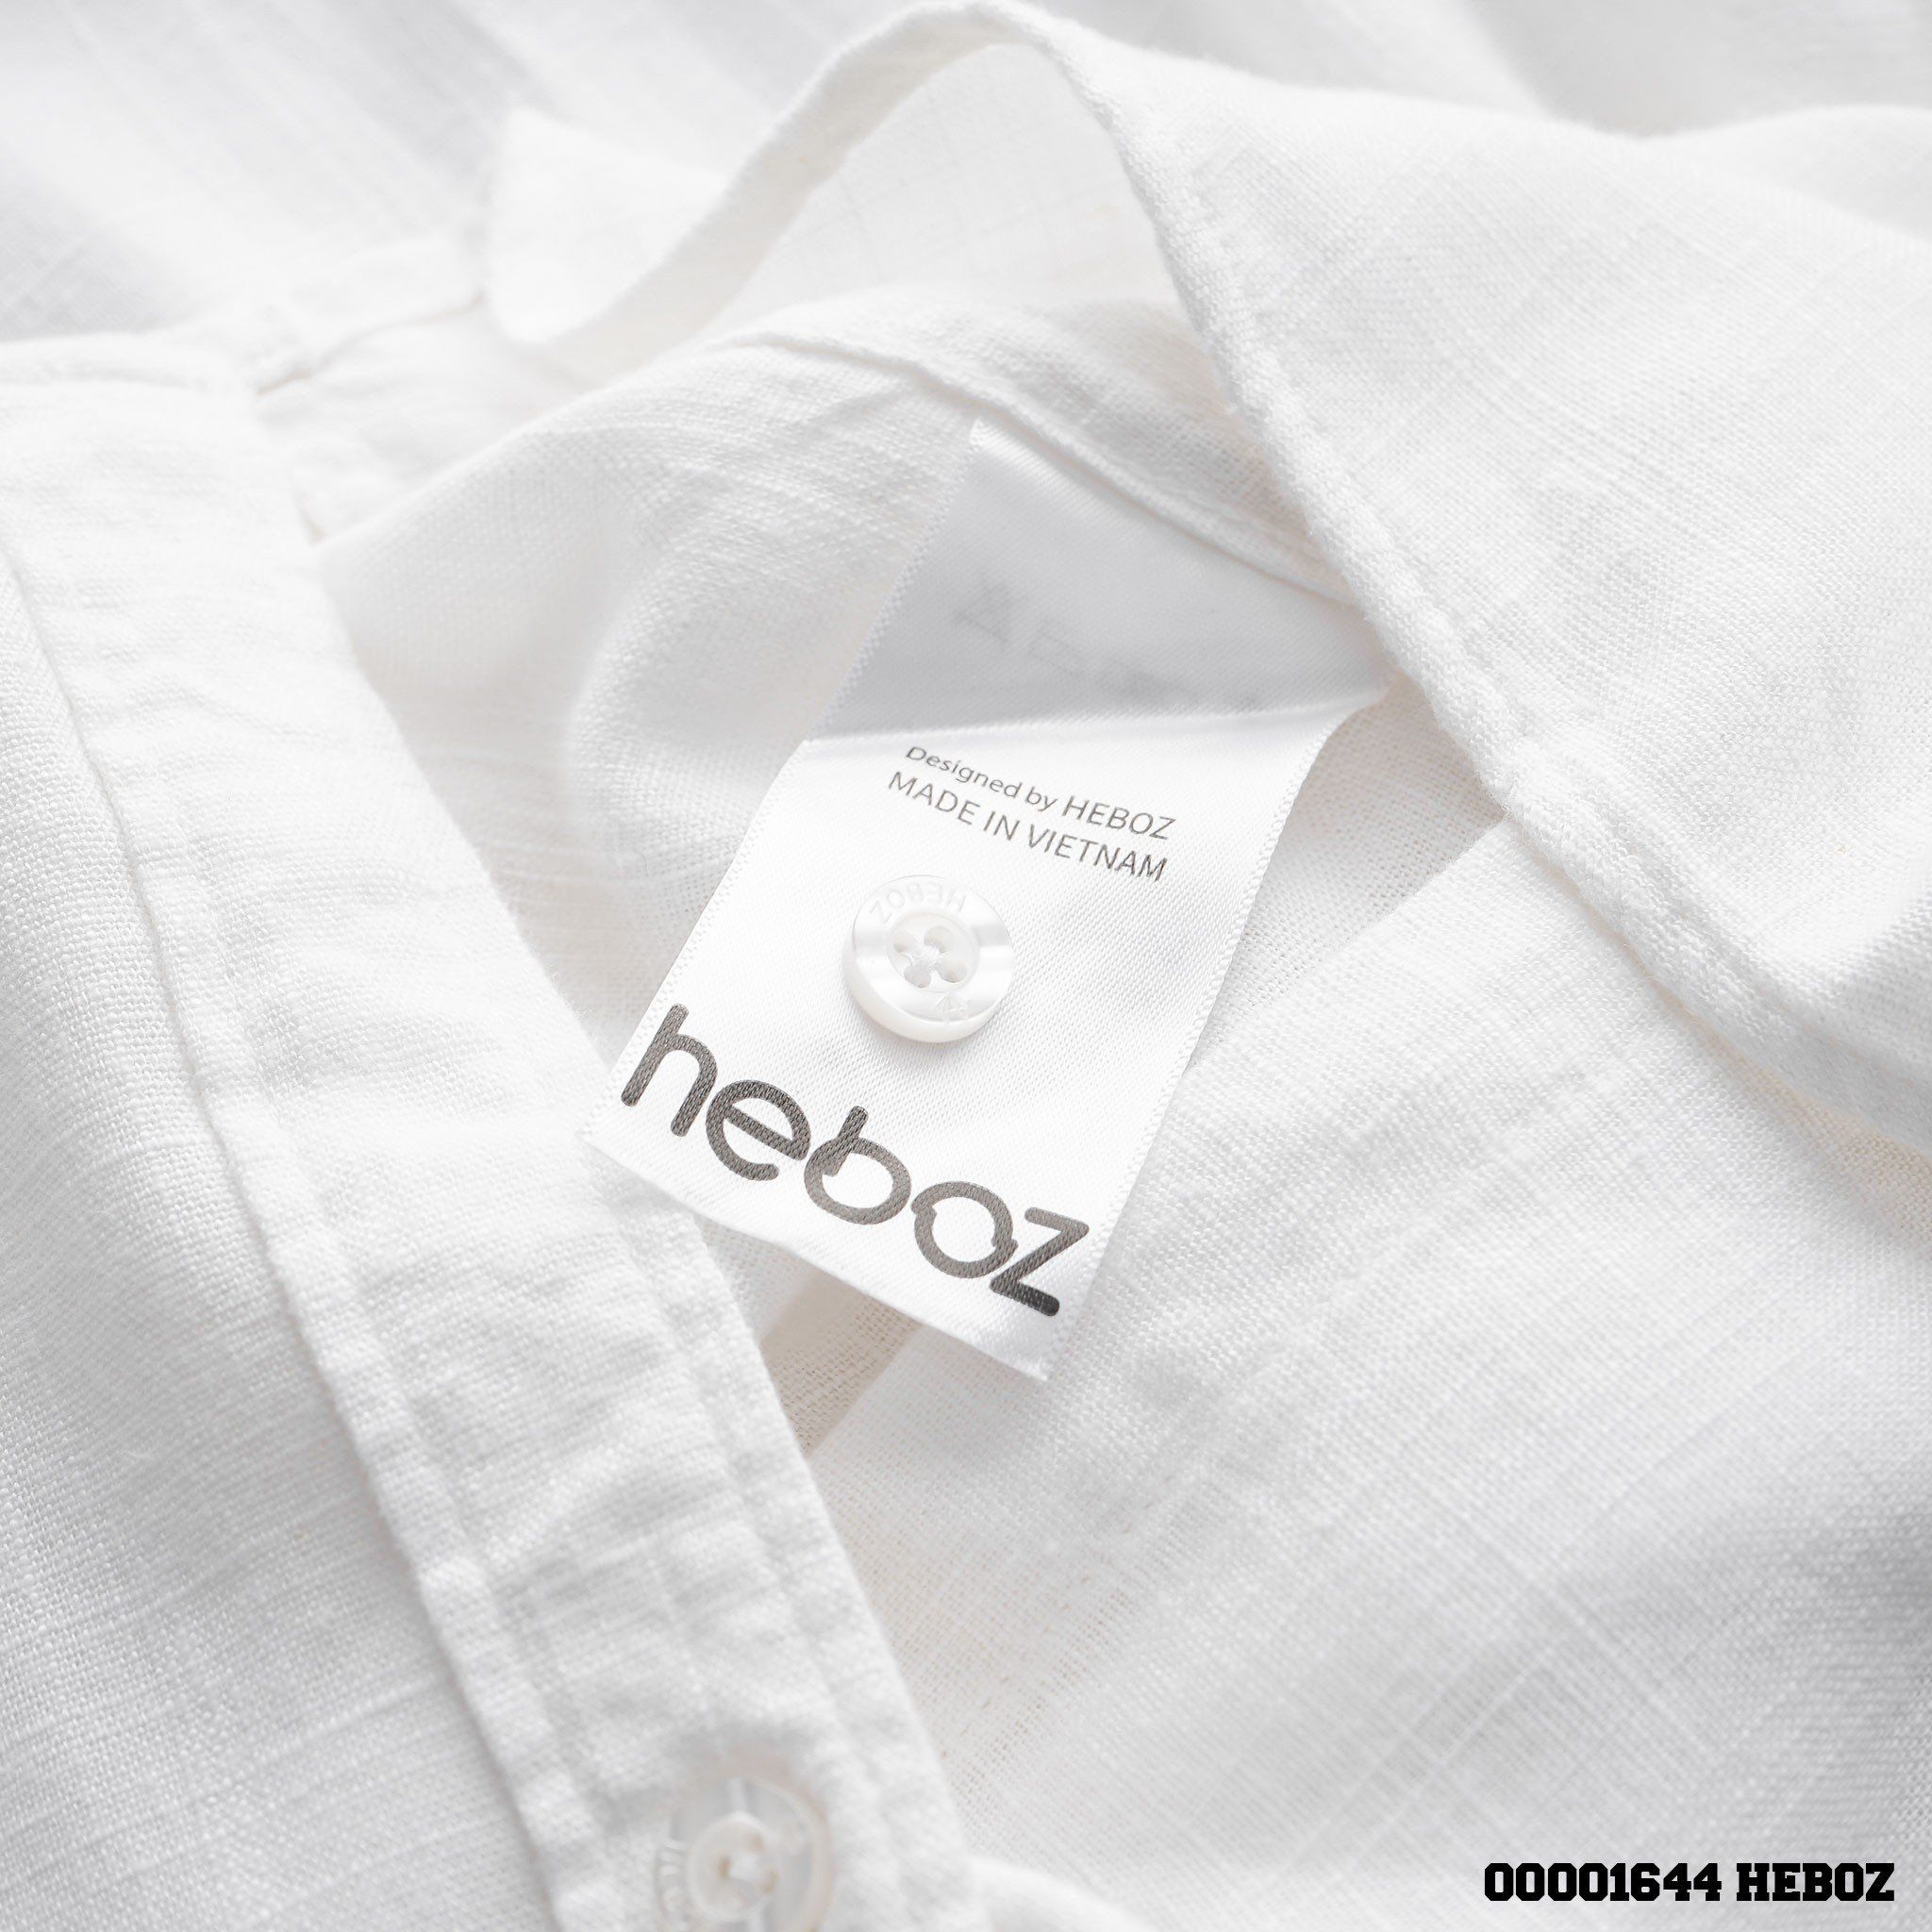  Áo sơ mi linen trắng Heboz - 00001644 